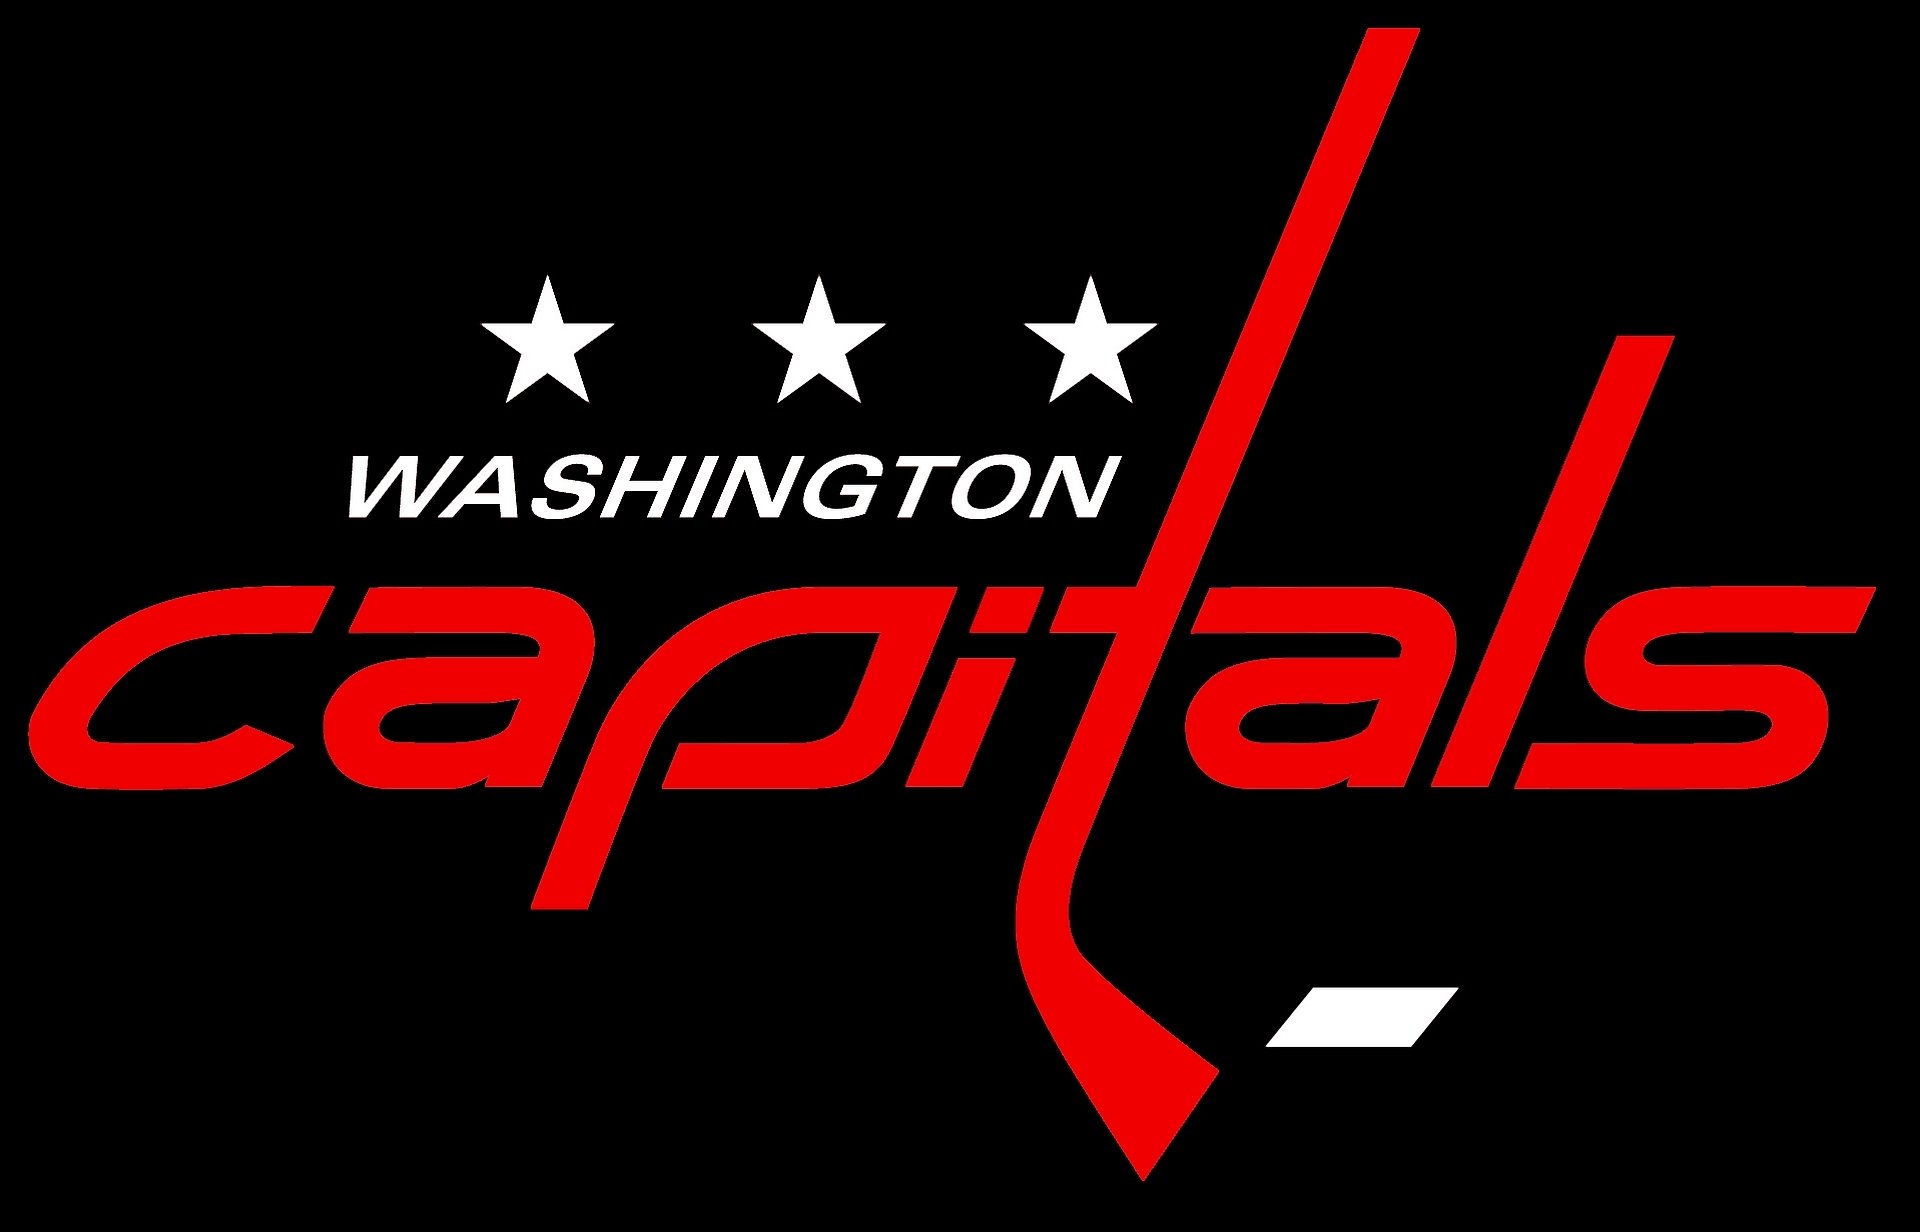 Get capitals. Шрифт Вашингтон Кэпиталз. Вашингтон Кэпиталз логотип Орел. Washington Capitals Mascot.